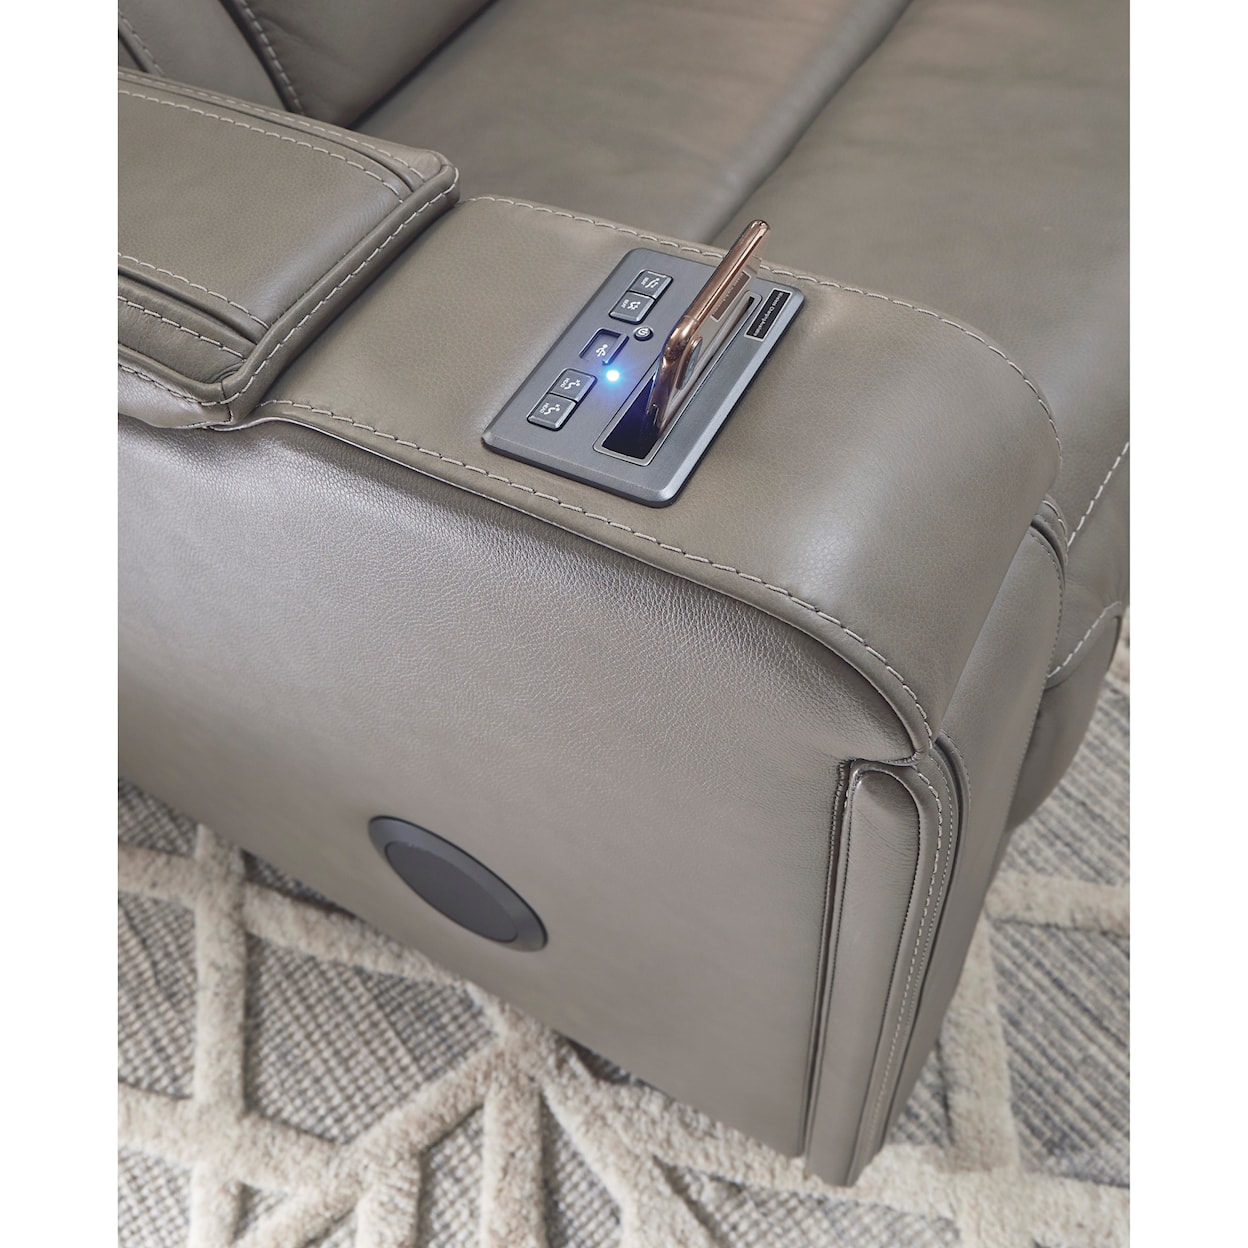 Ashley Furniture Signature Design Boerna Power Recliner with Adjustable Headrest